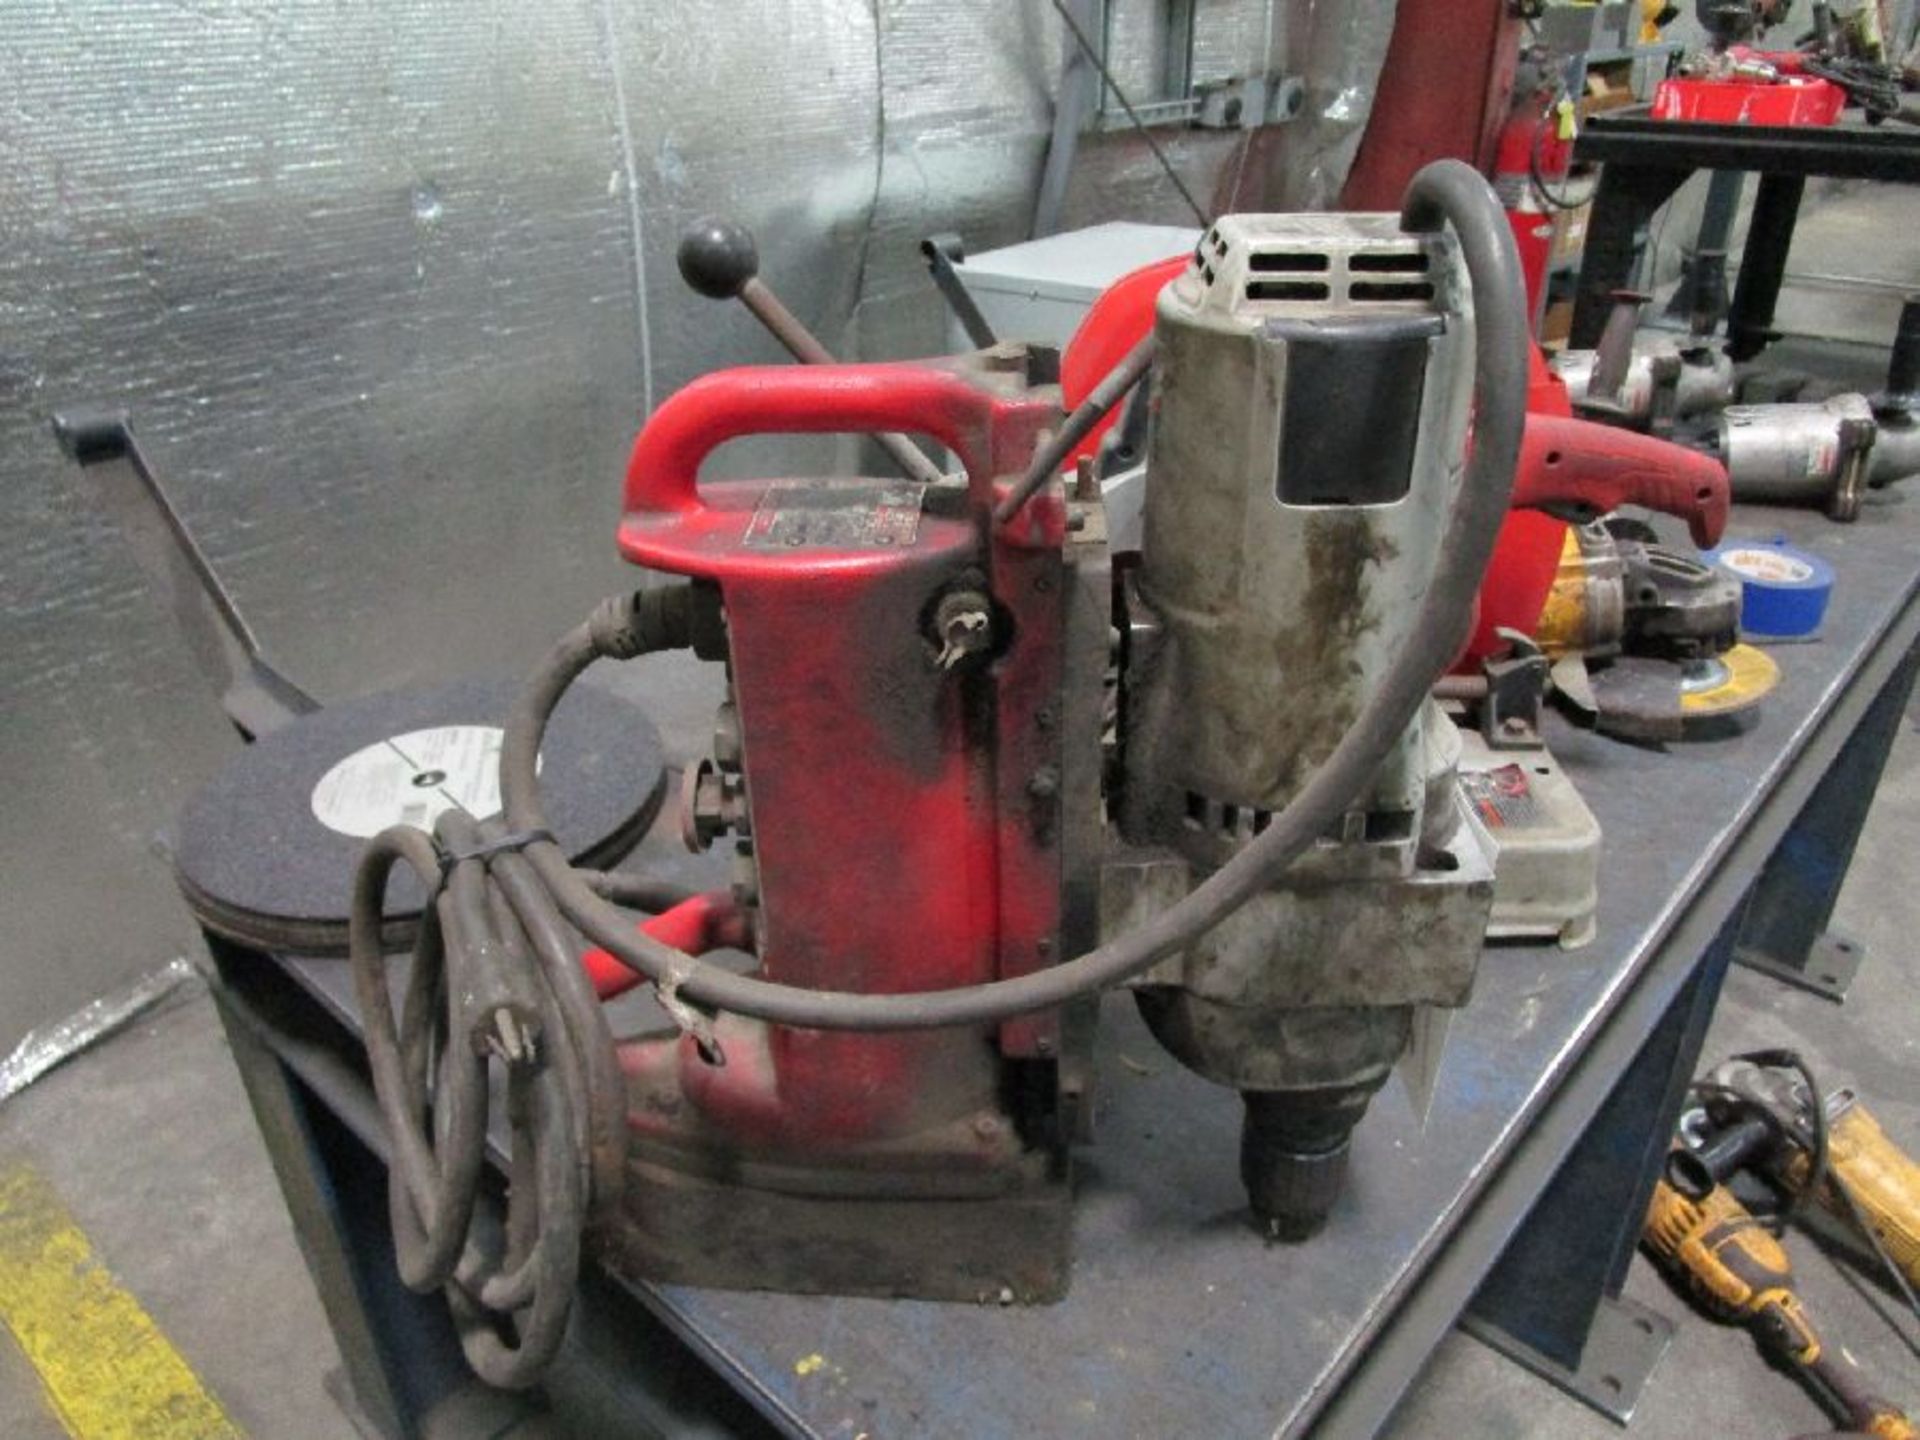 Milwaukee Model 4292-1 1 1/4"" Hole Capacity Drill Motor - Image 3 of 4